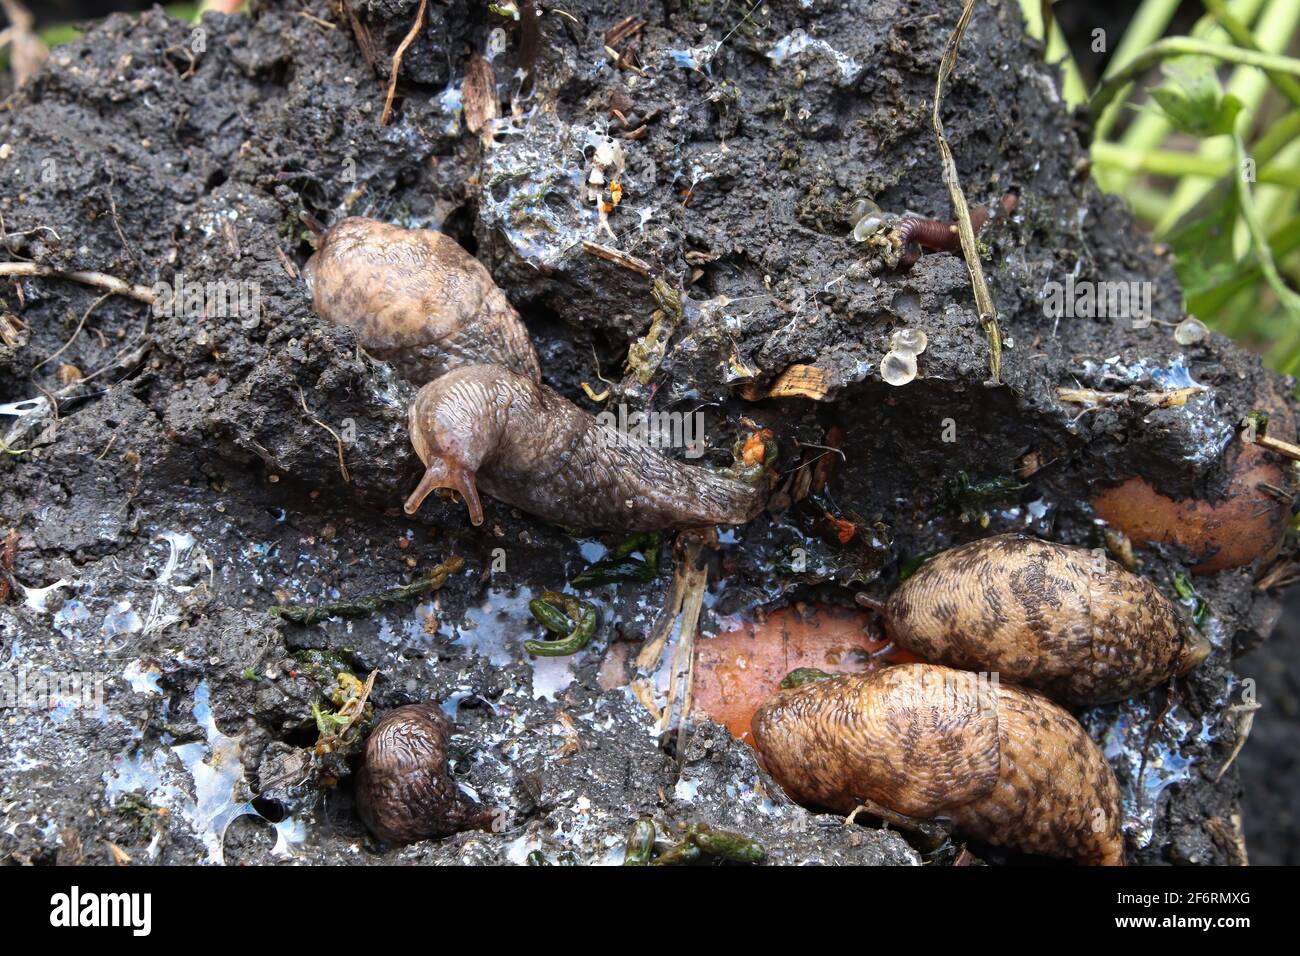 Various slugs hiding in the soil in the garden Stock Photo